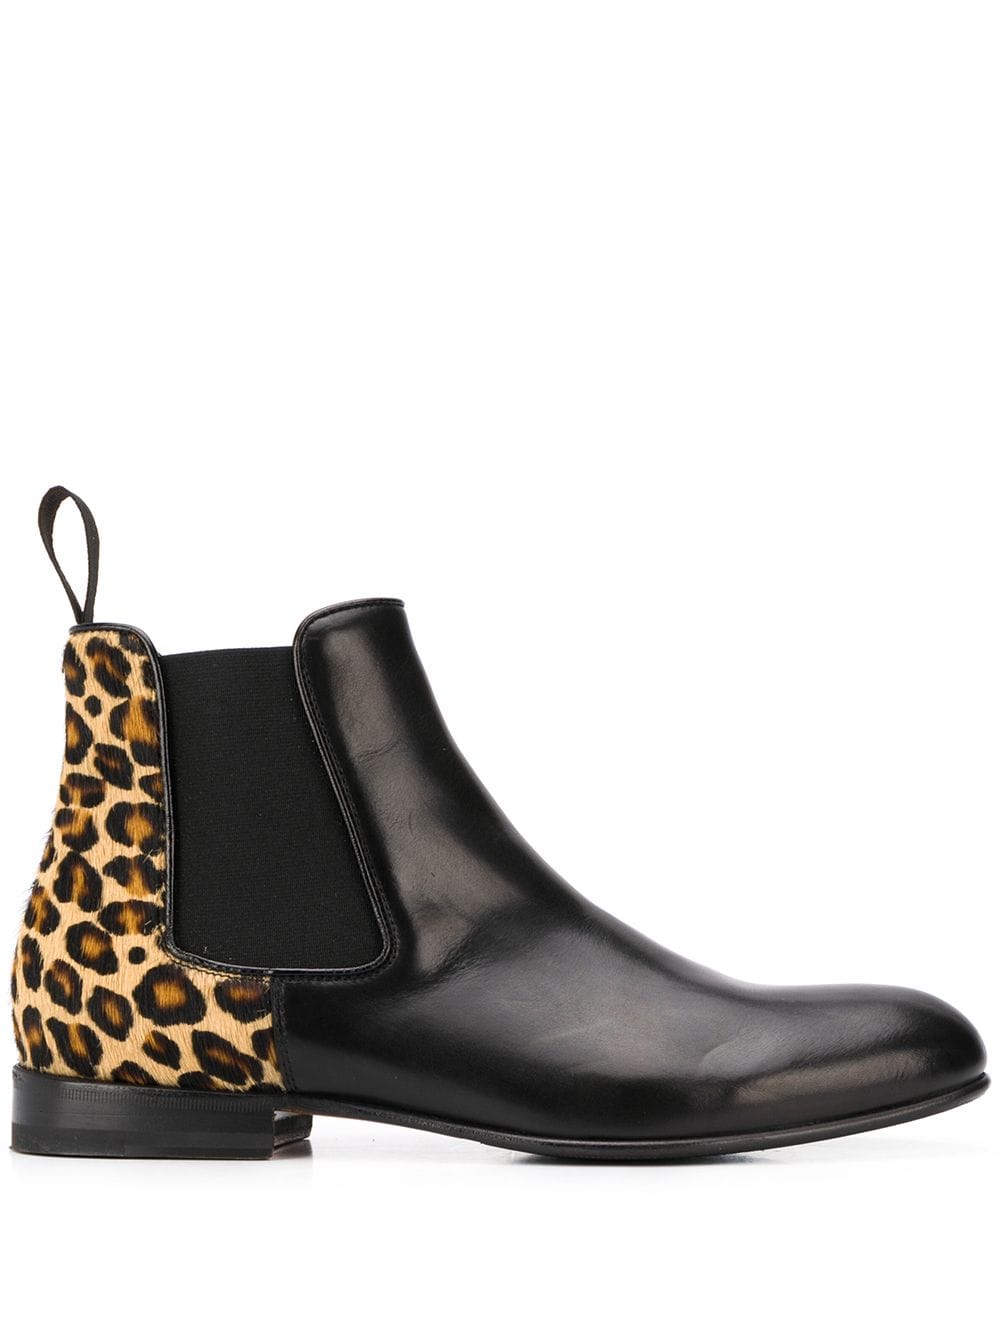 фото Scarosso ботинки челси lexi с леопардовым принтом